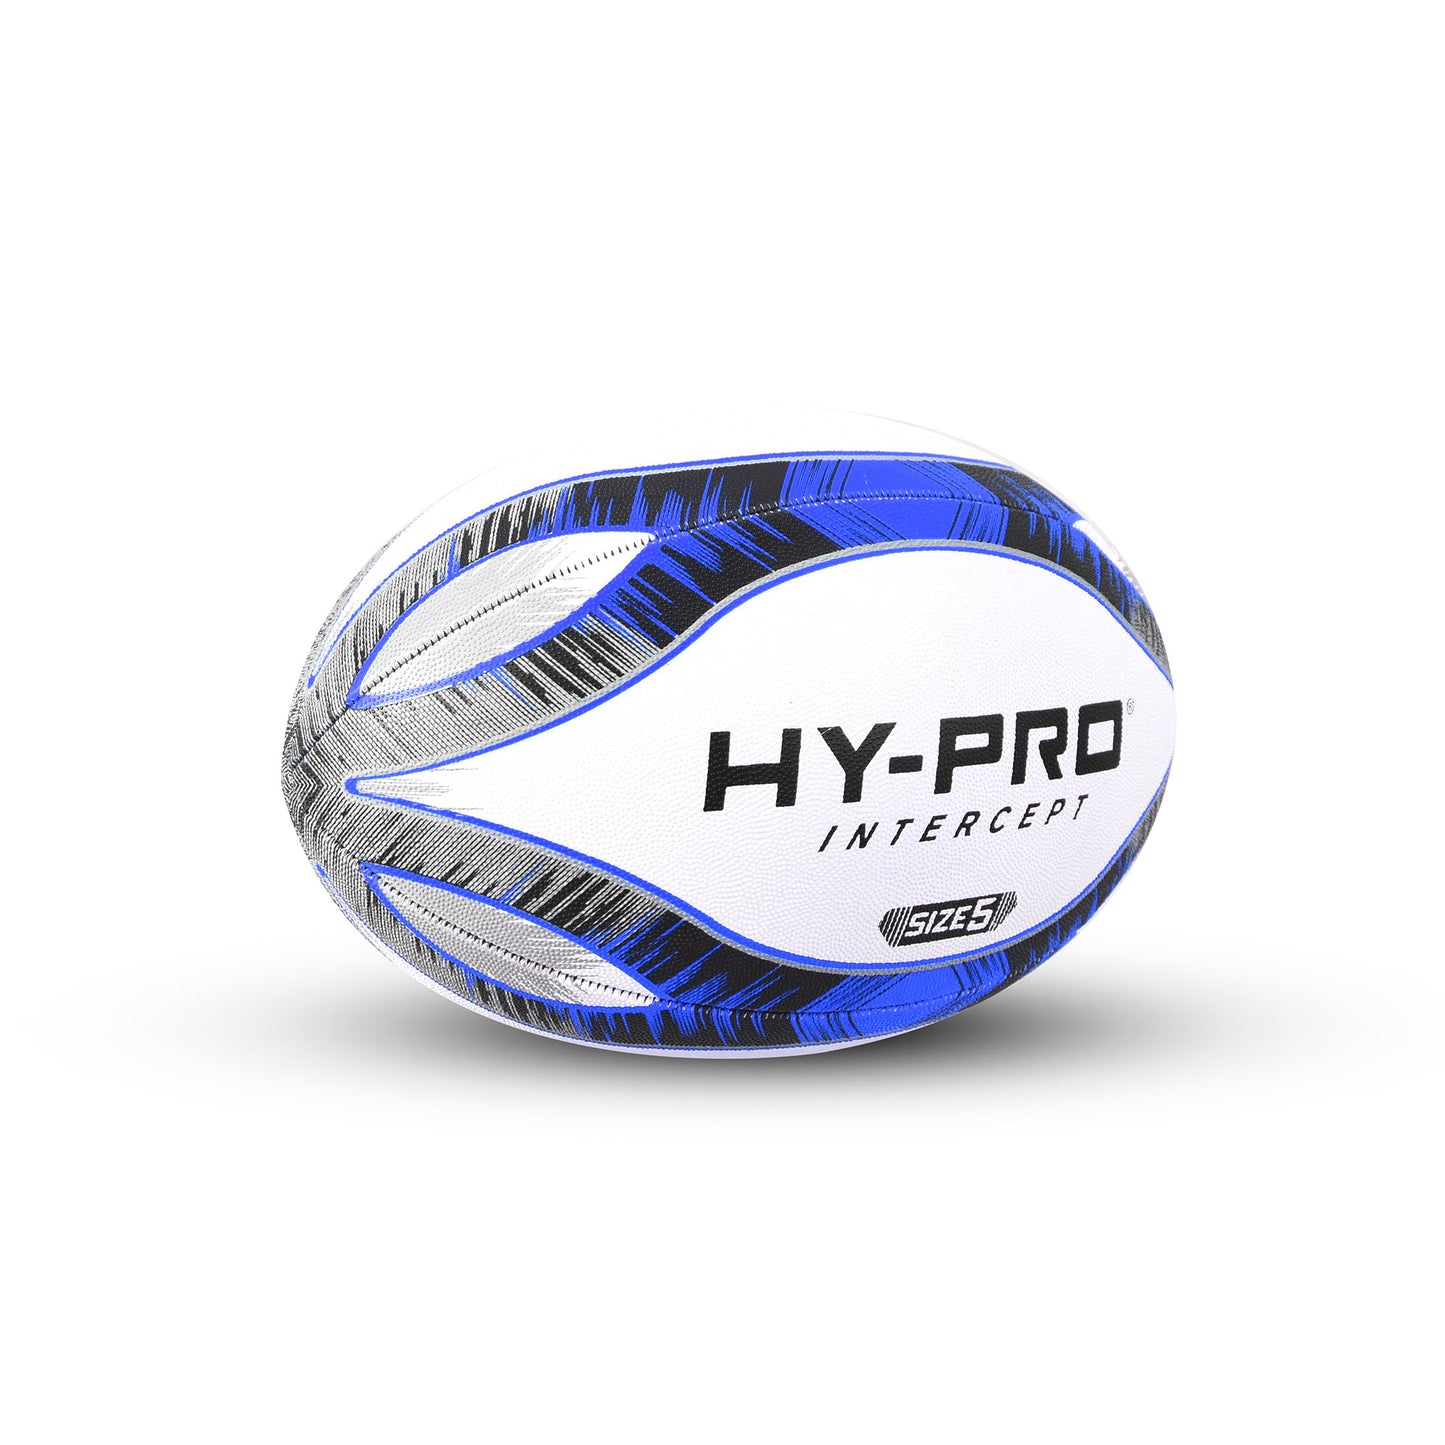 Hy-Pro Intercept Rugby Ball